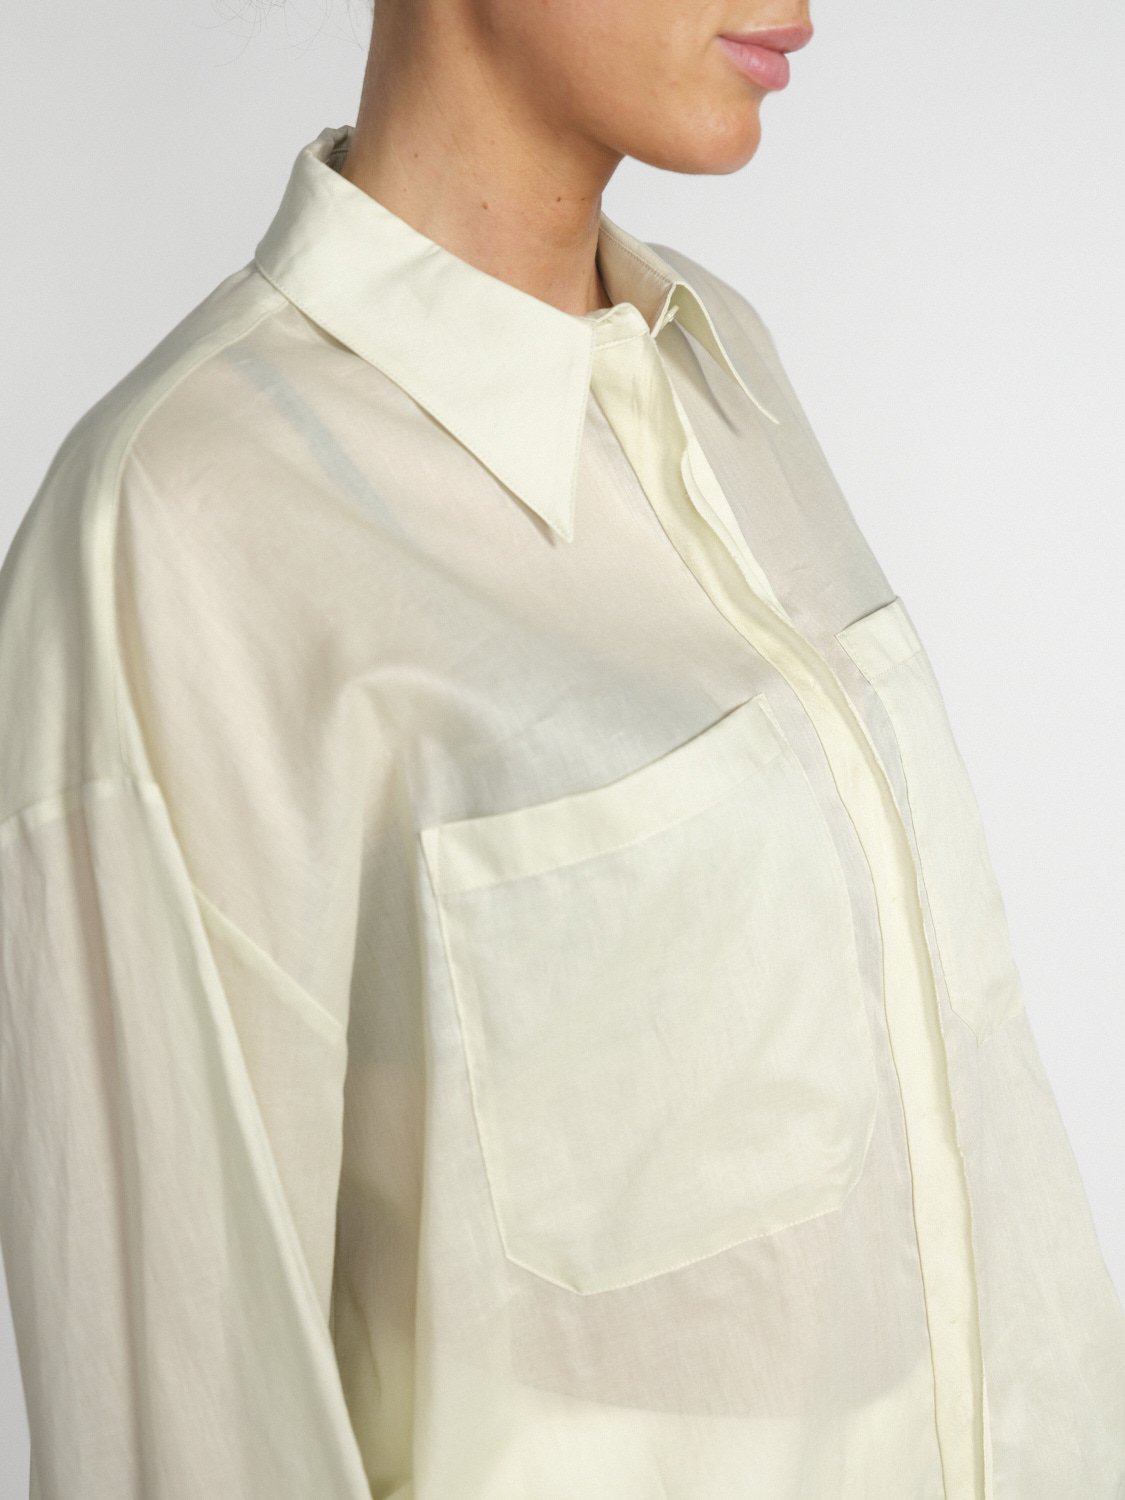 Dorothee Schumacher Fantasy - Slightly transparent blouse made of cotton  hellgrün S